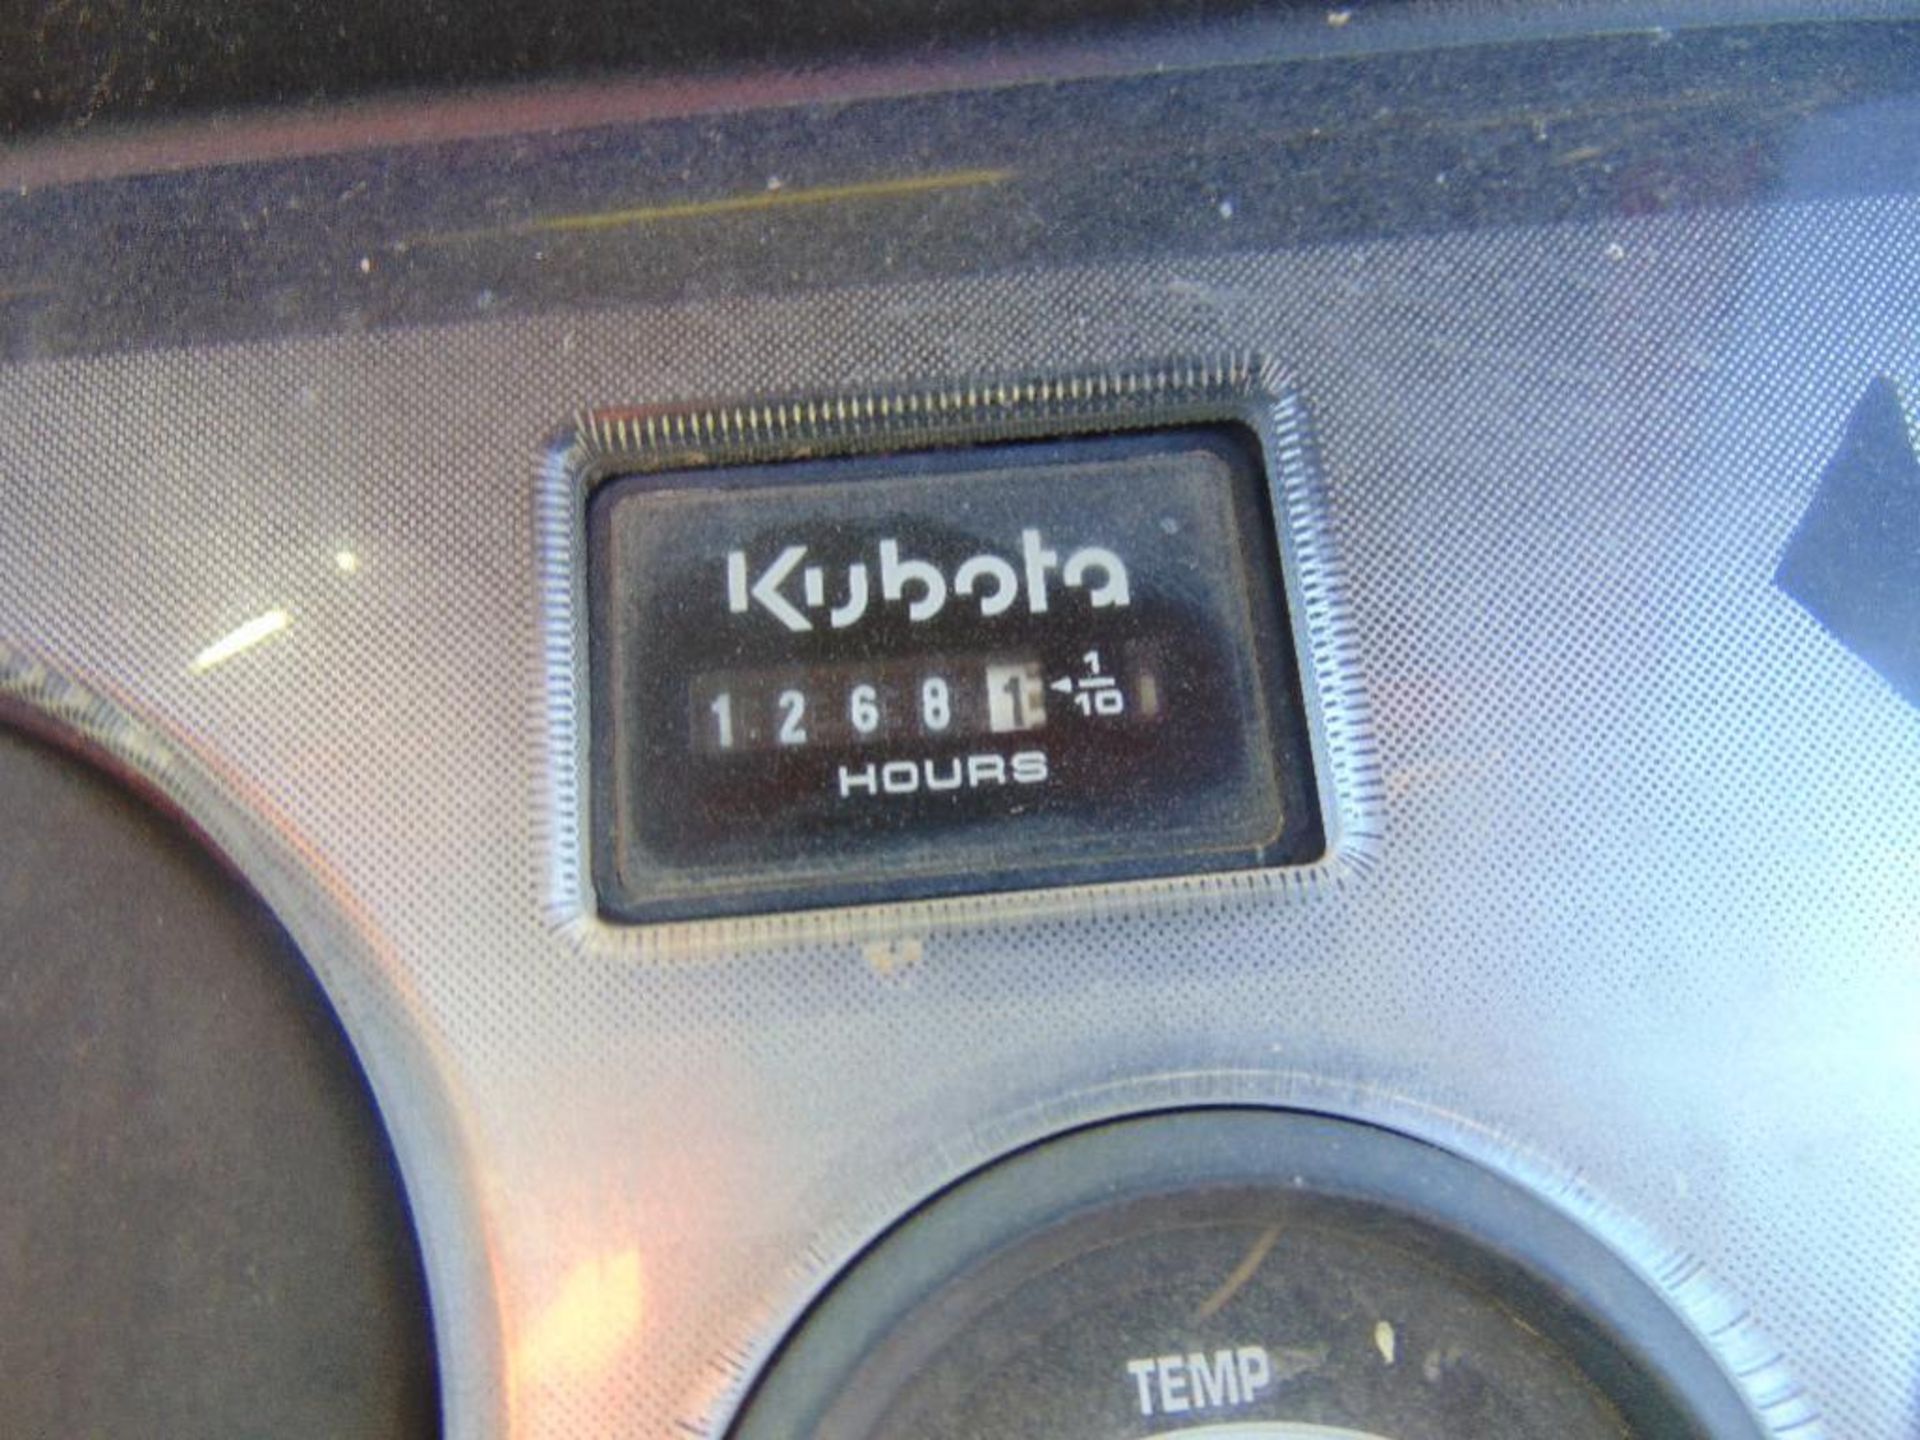 Kubota RTV900 side by side atv s/n d1883,1268 hrs, - Image 4 of 4